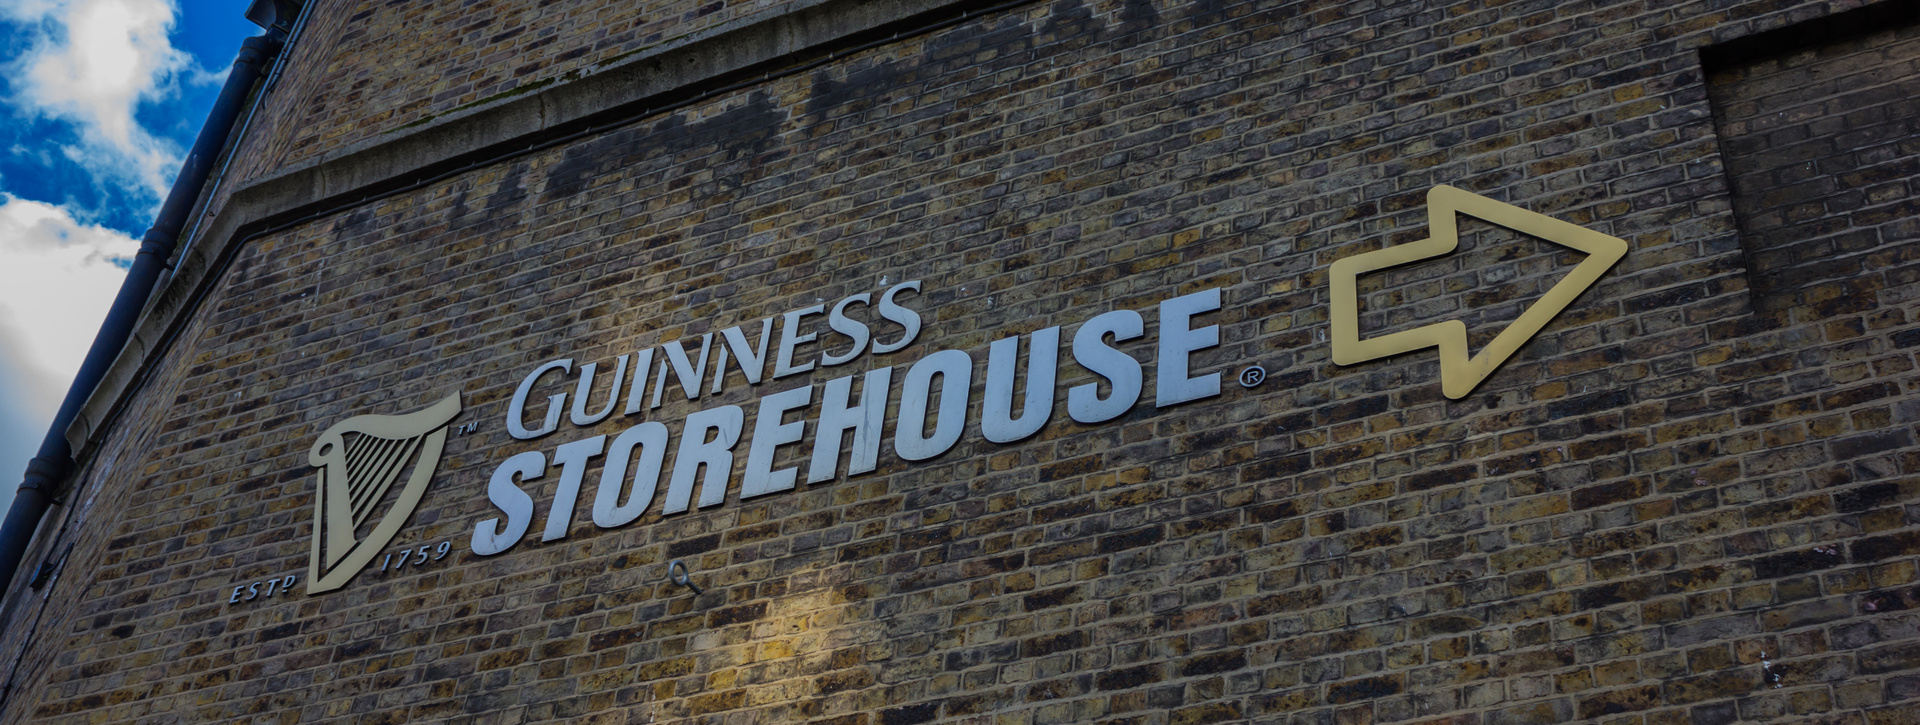 Visita guiada a la Guinness Storehouse + cerveza